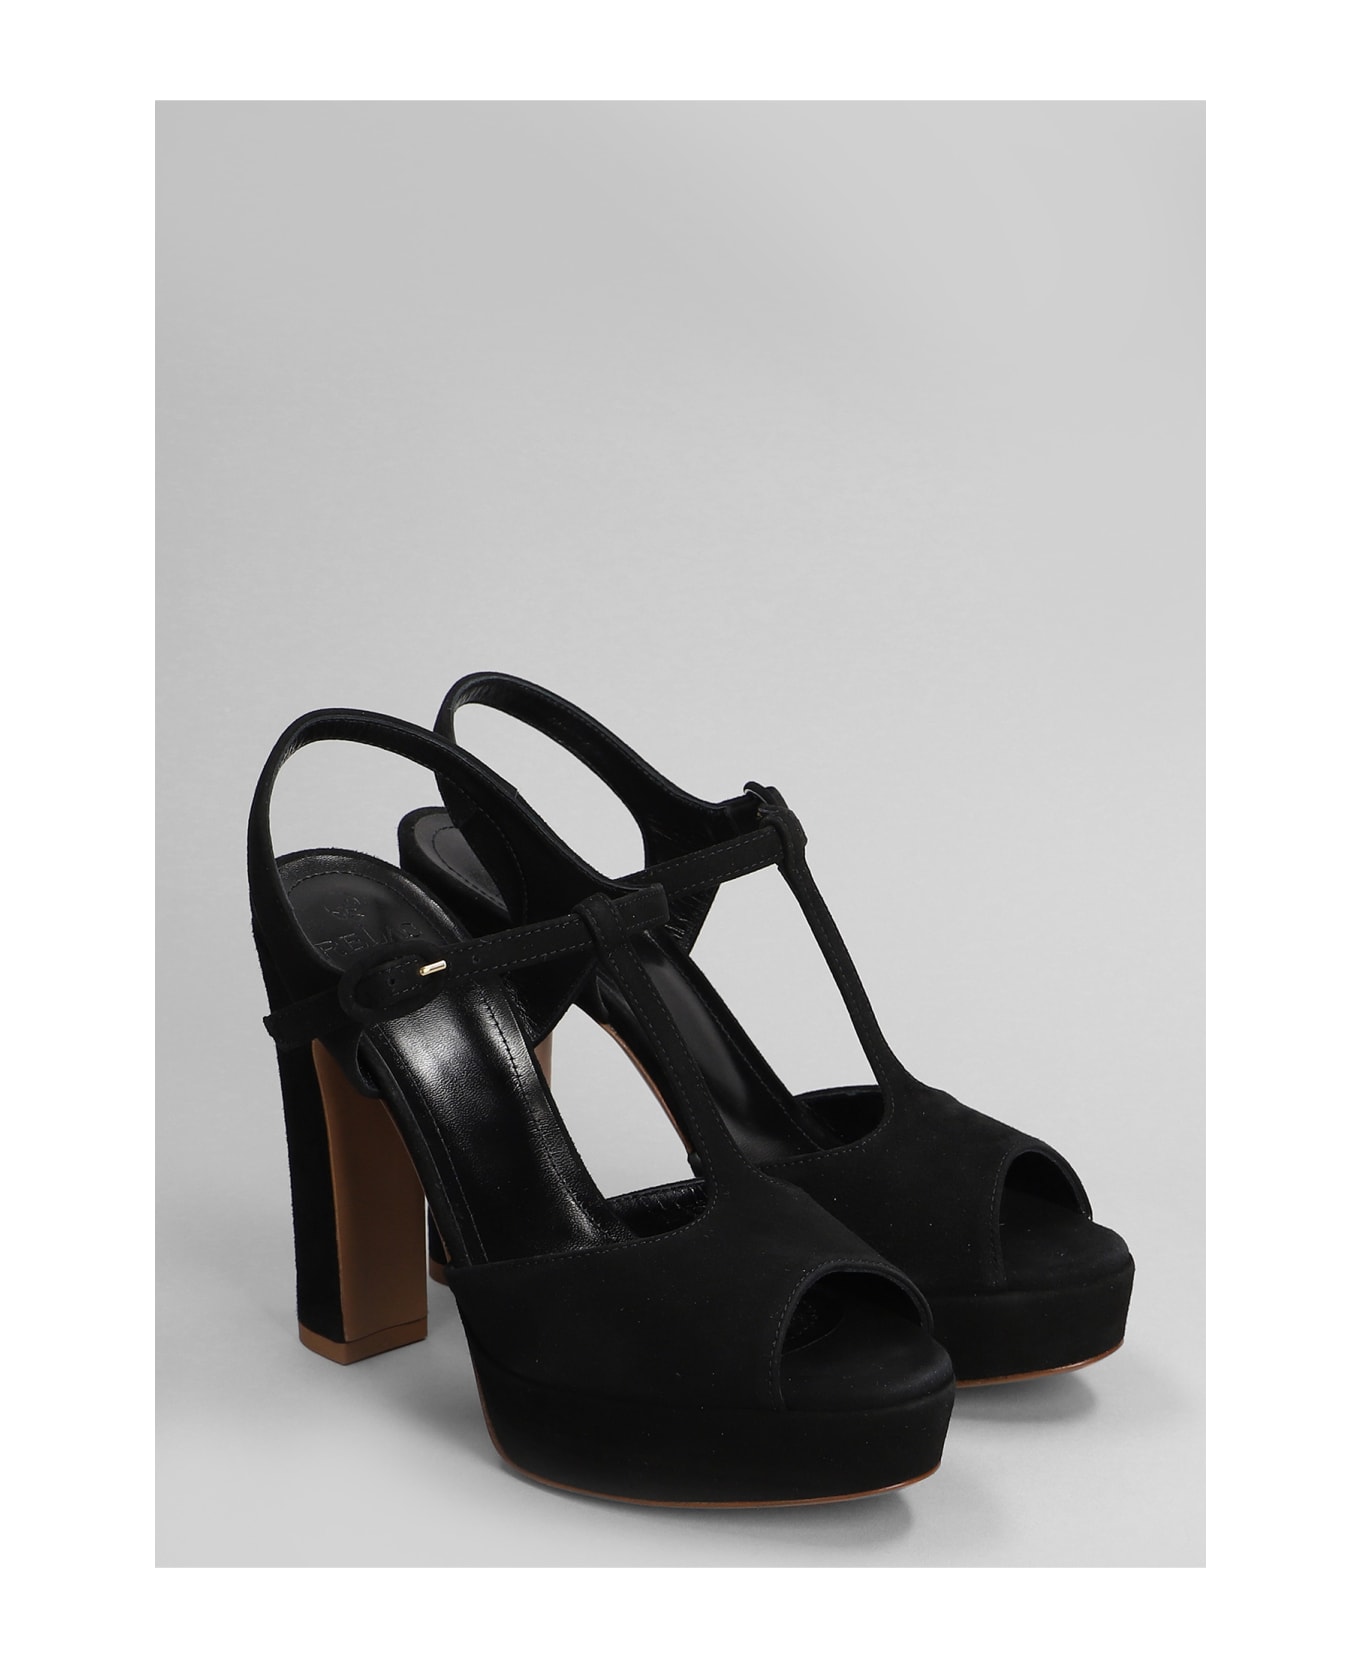 Relac Sandals In Black Suede - black